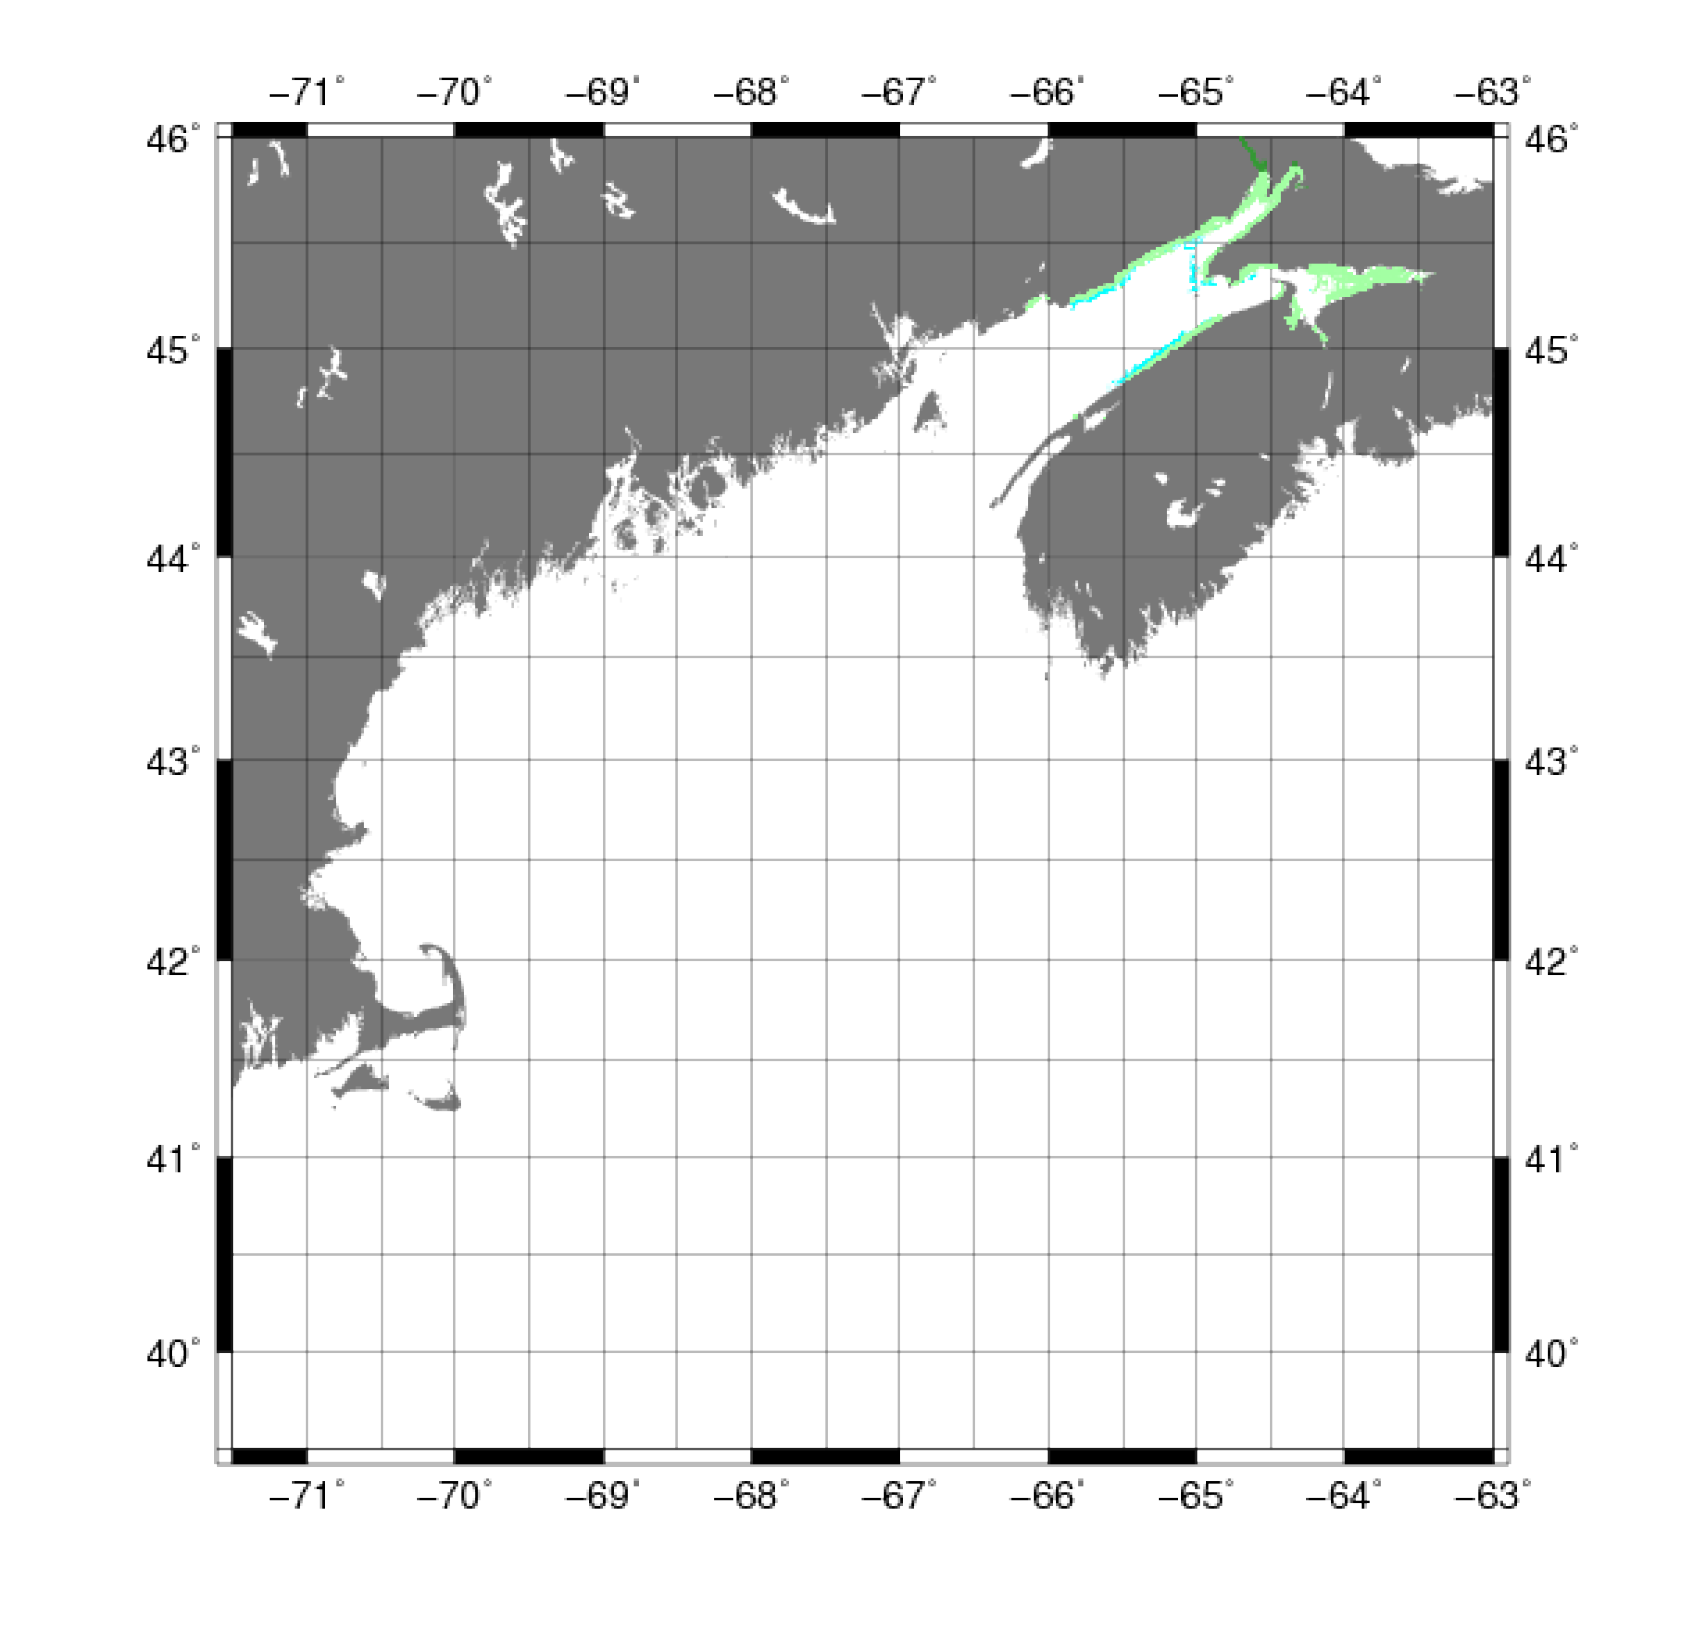 Northwest Atlantic Dataset (NWATL)